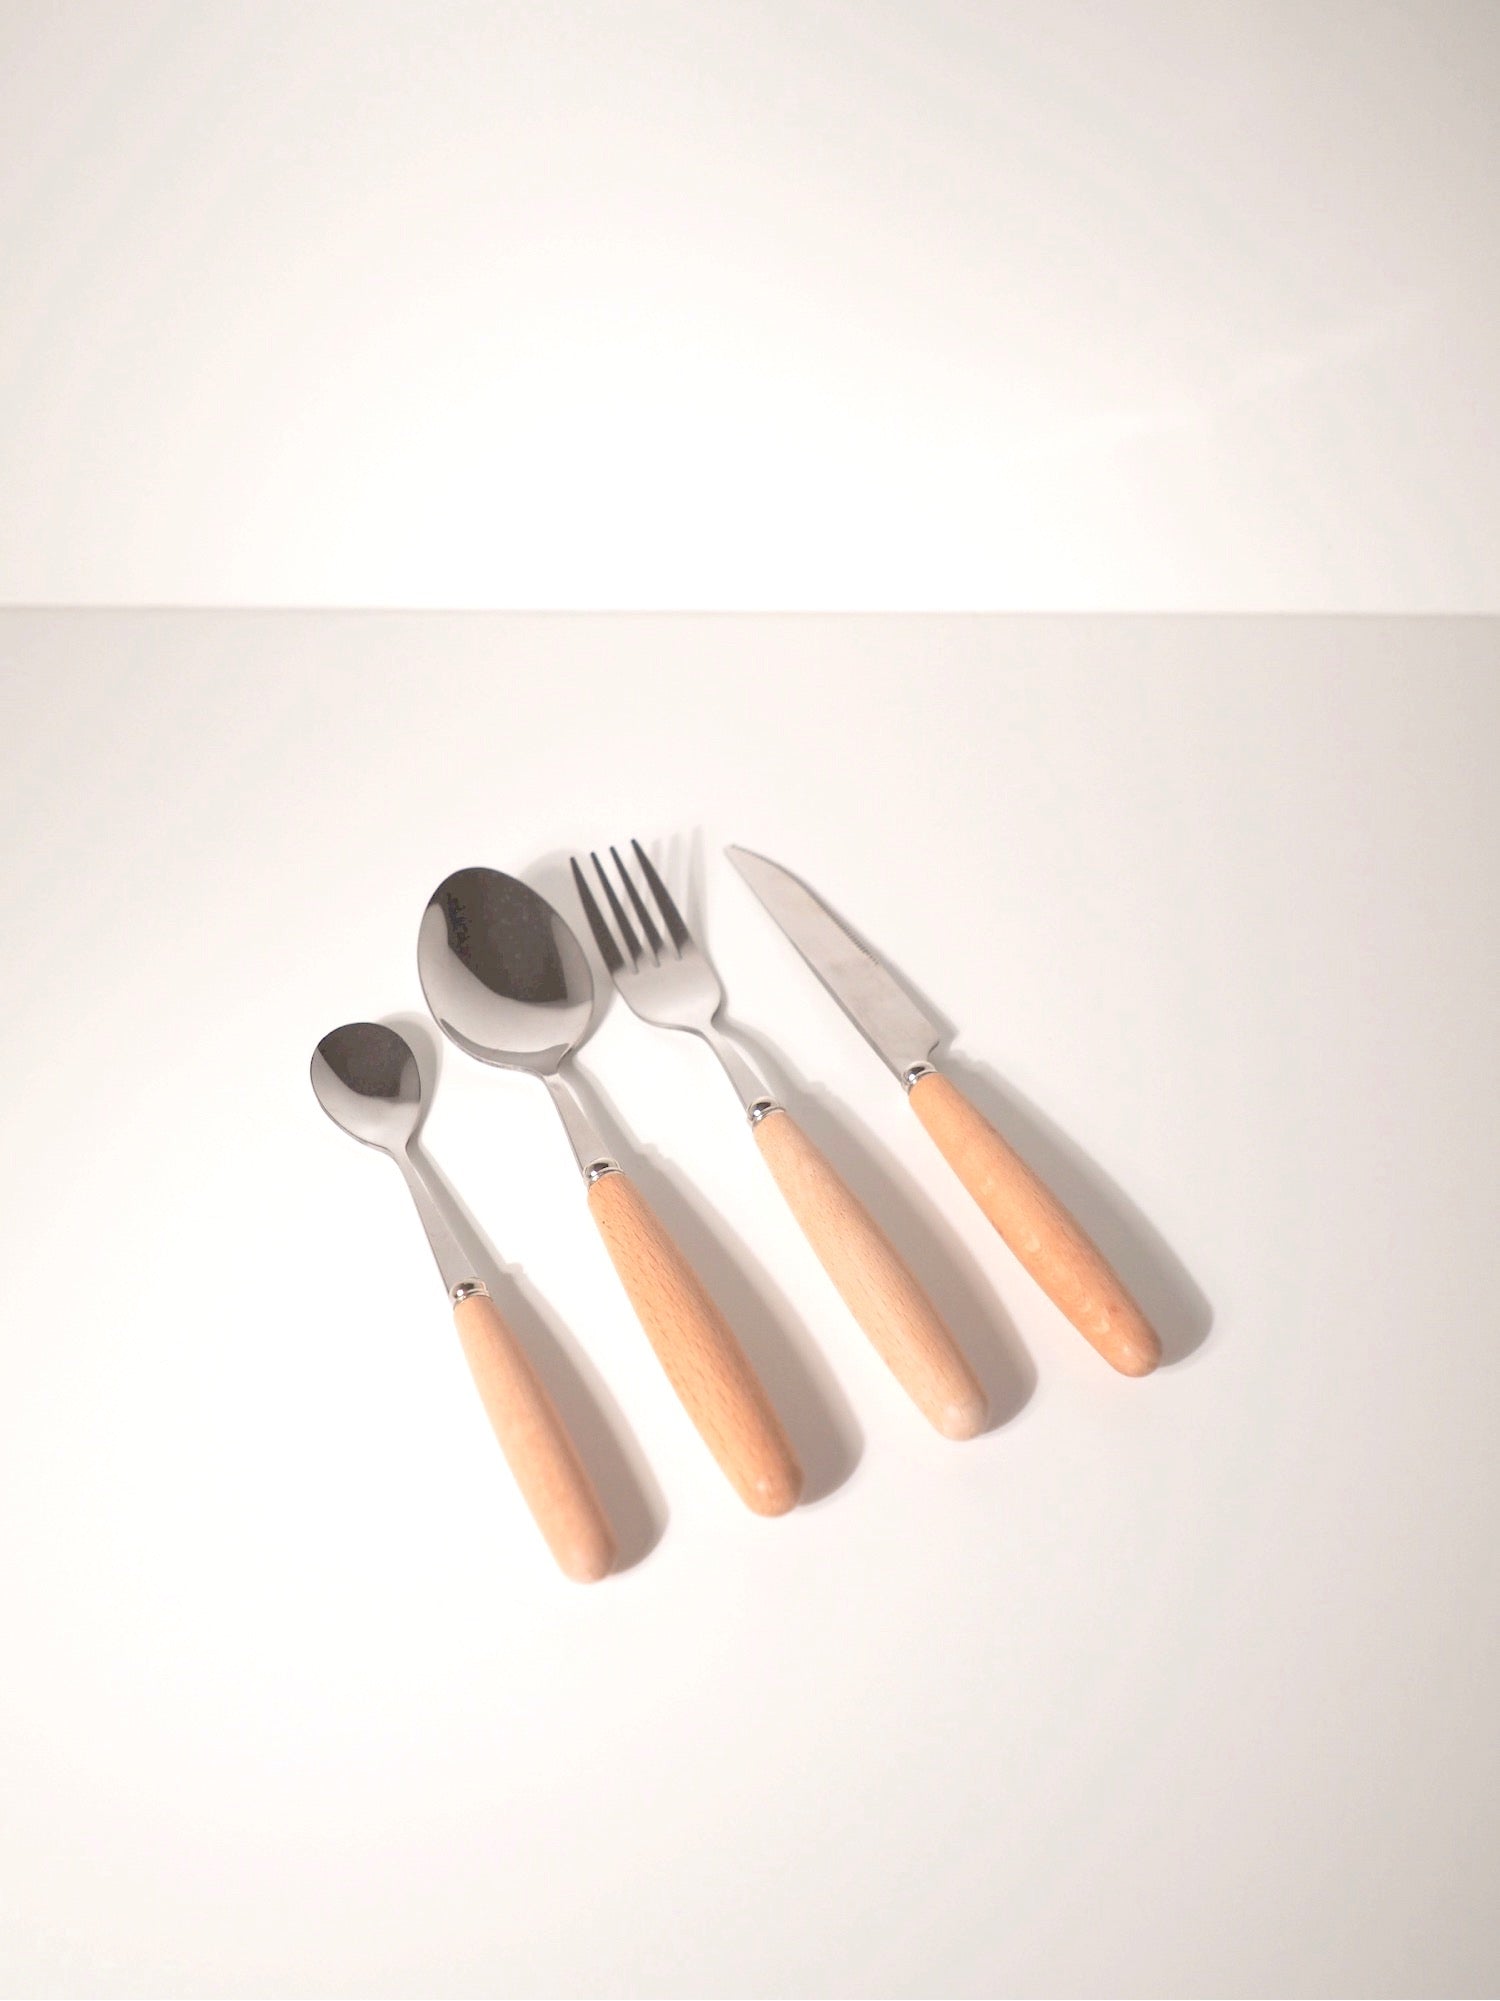 SAMPLE - CHO Cutlery Set 001